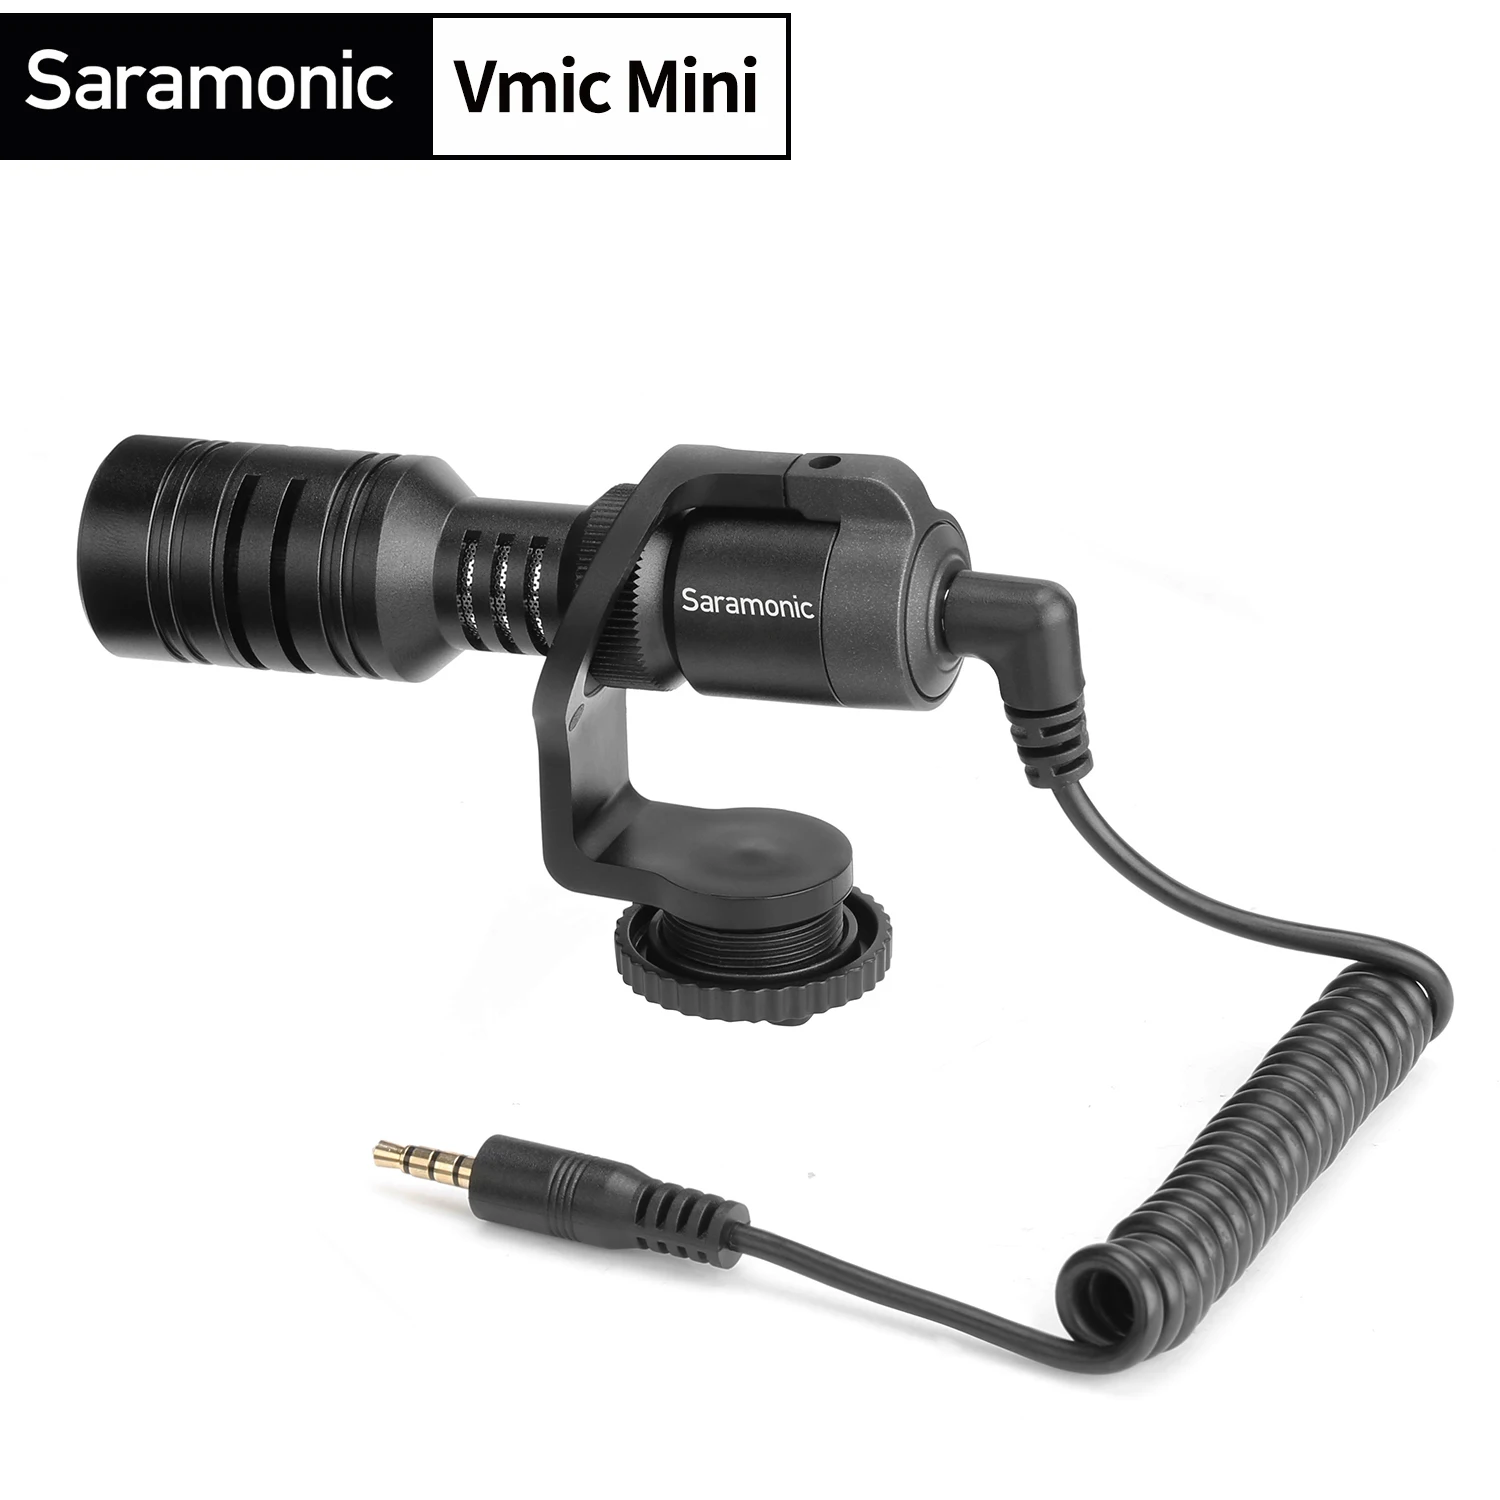 Saramonic Vmic Mini Professional Shotgun Condenser Microphone for Camera Smartphone with Shock Mount Vlogging Youtube Live